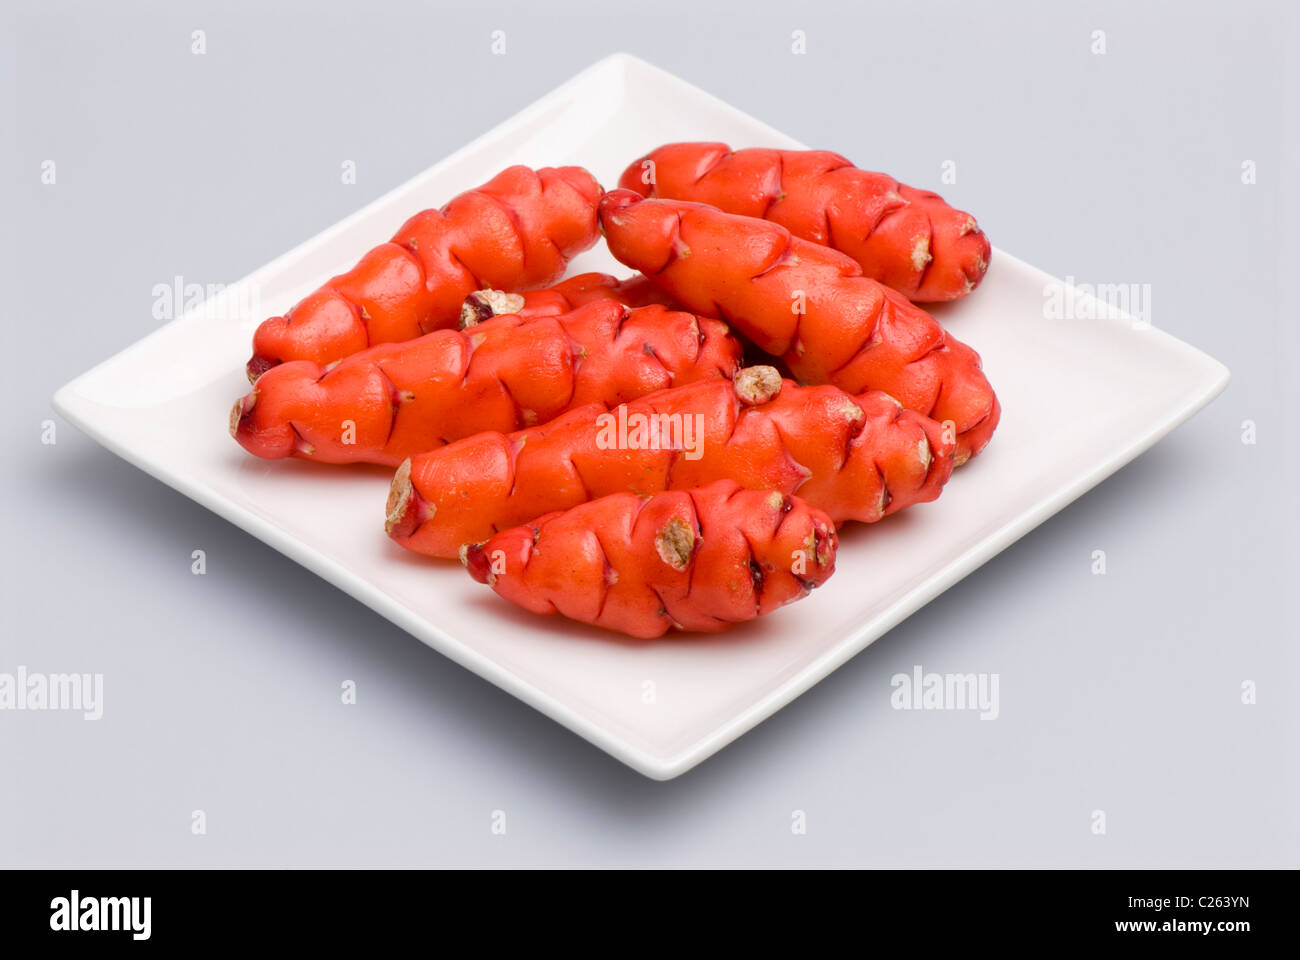 Red yams Oxalis tuberosa on a square white plate dish. White background. Stock Photo